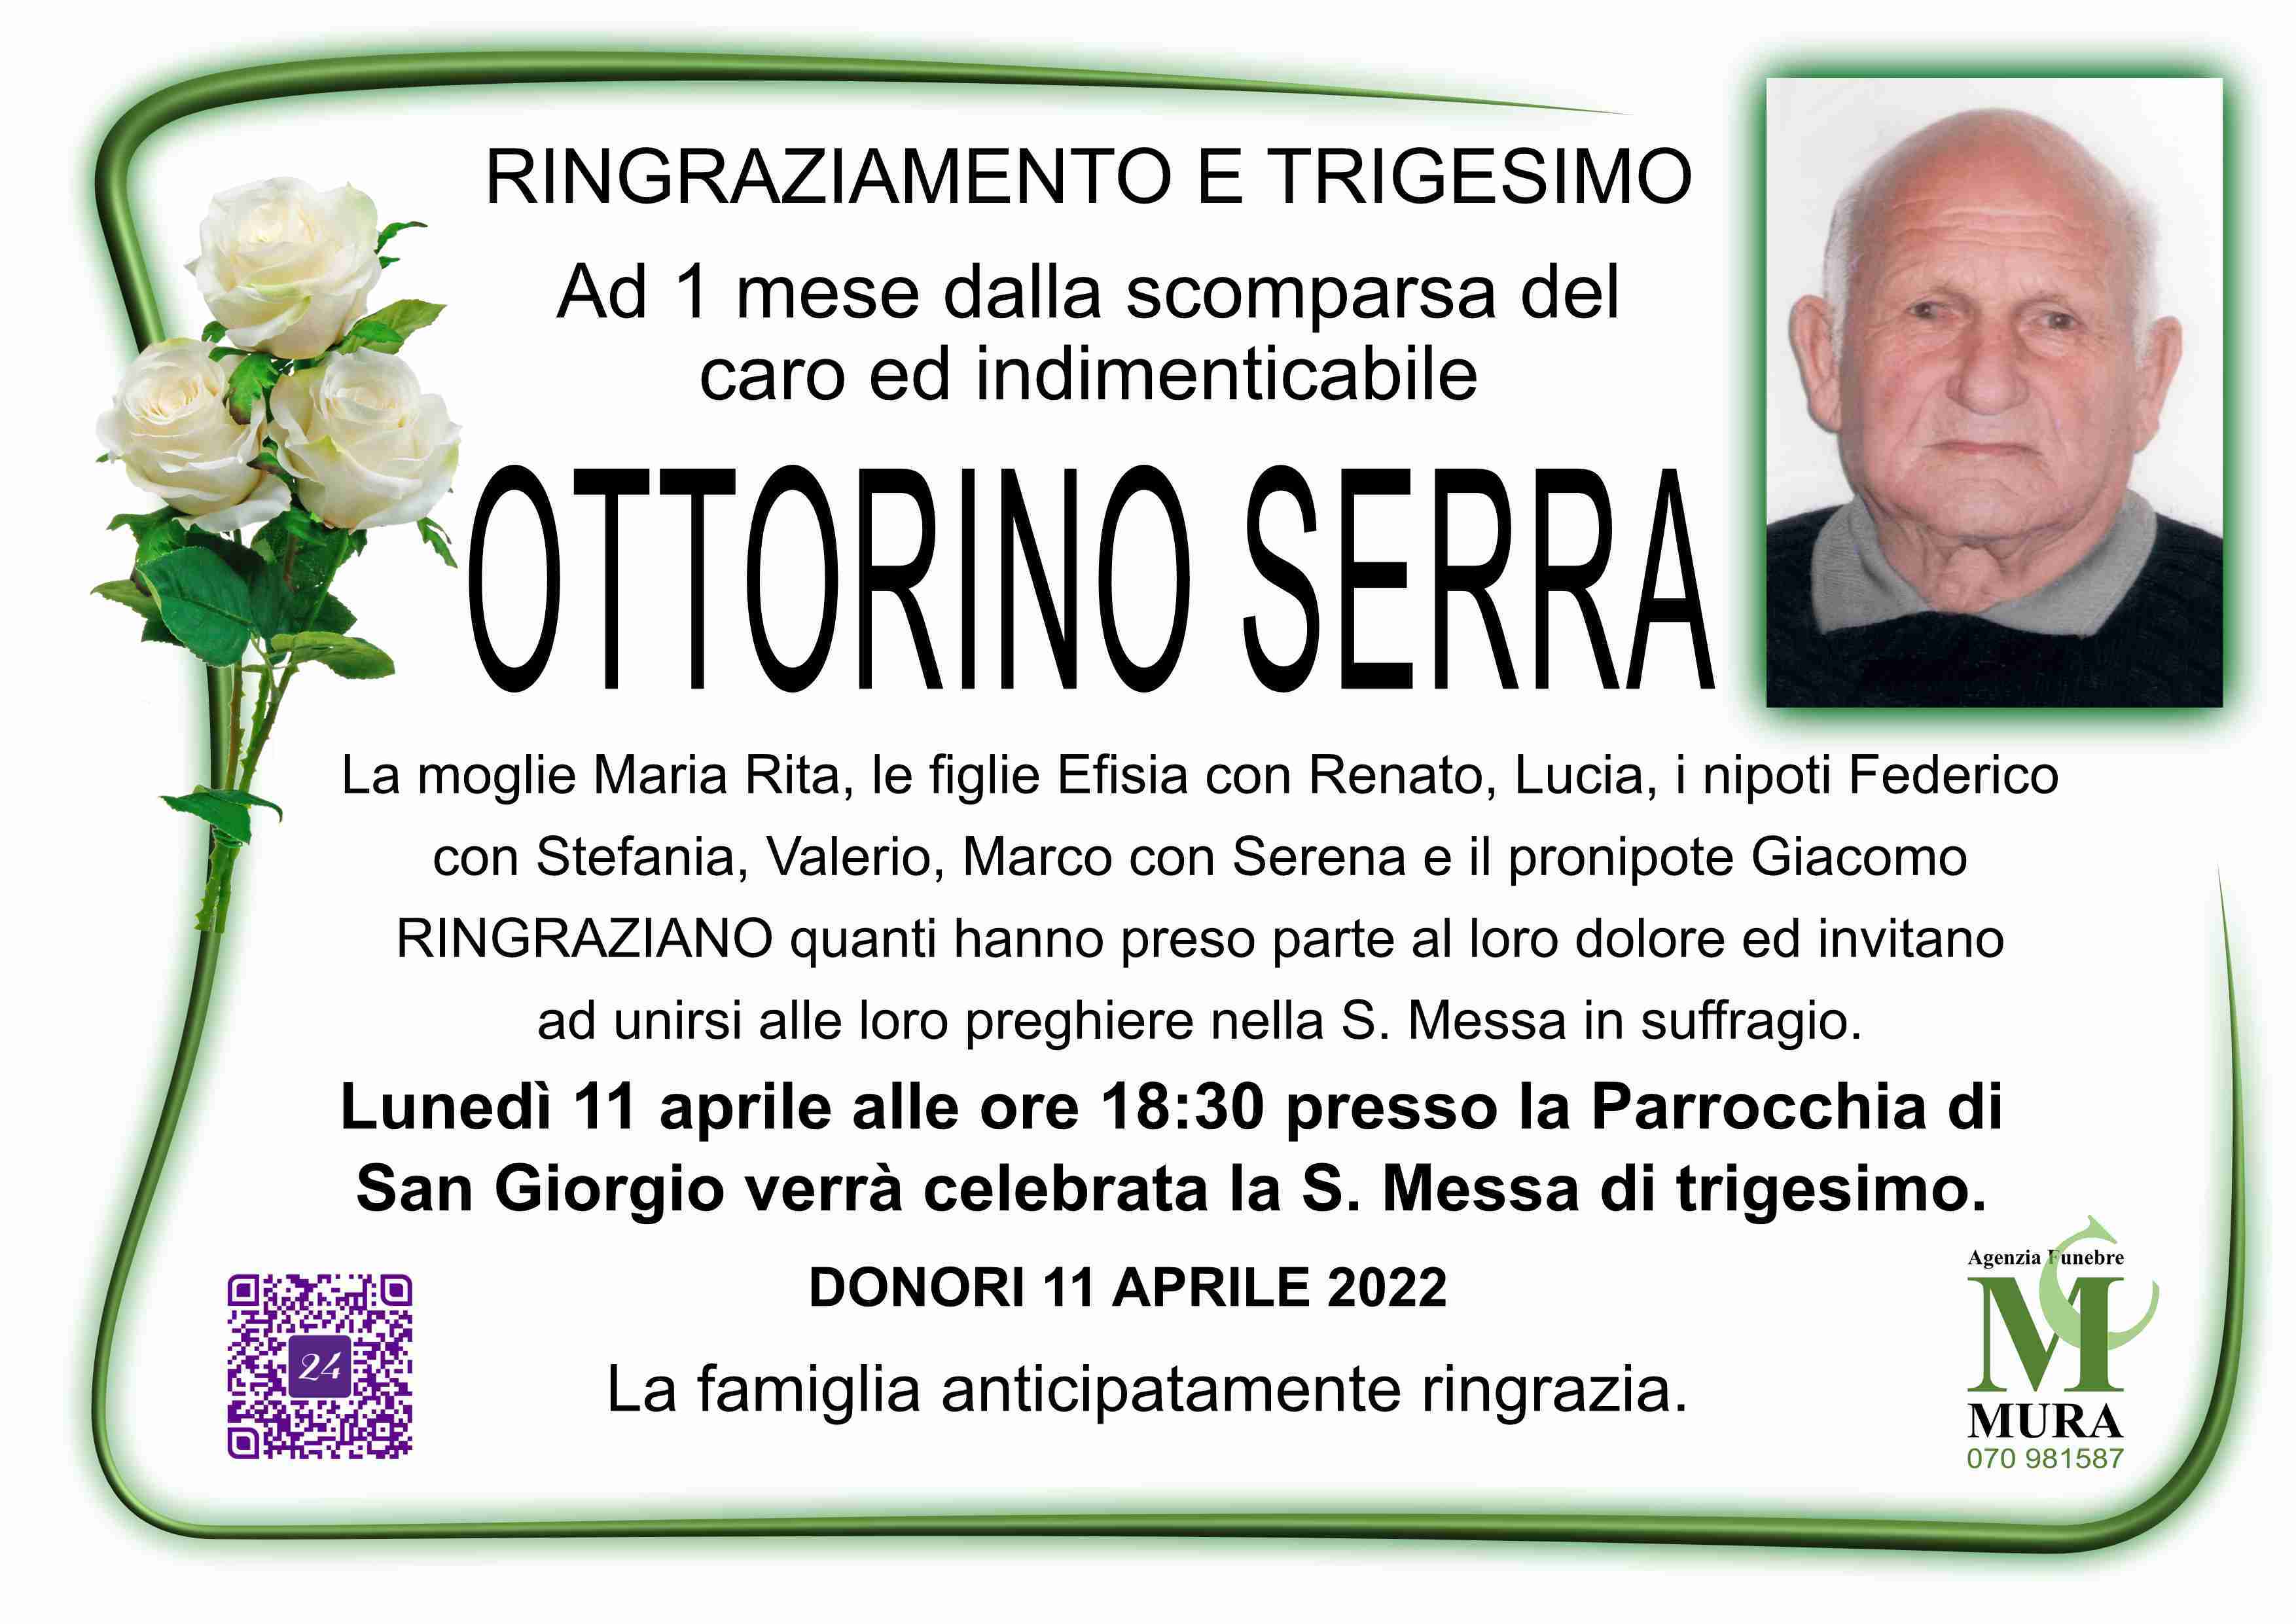 Ottorino Serra